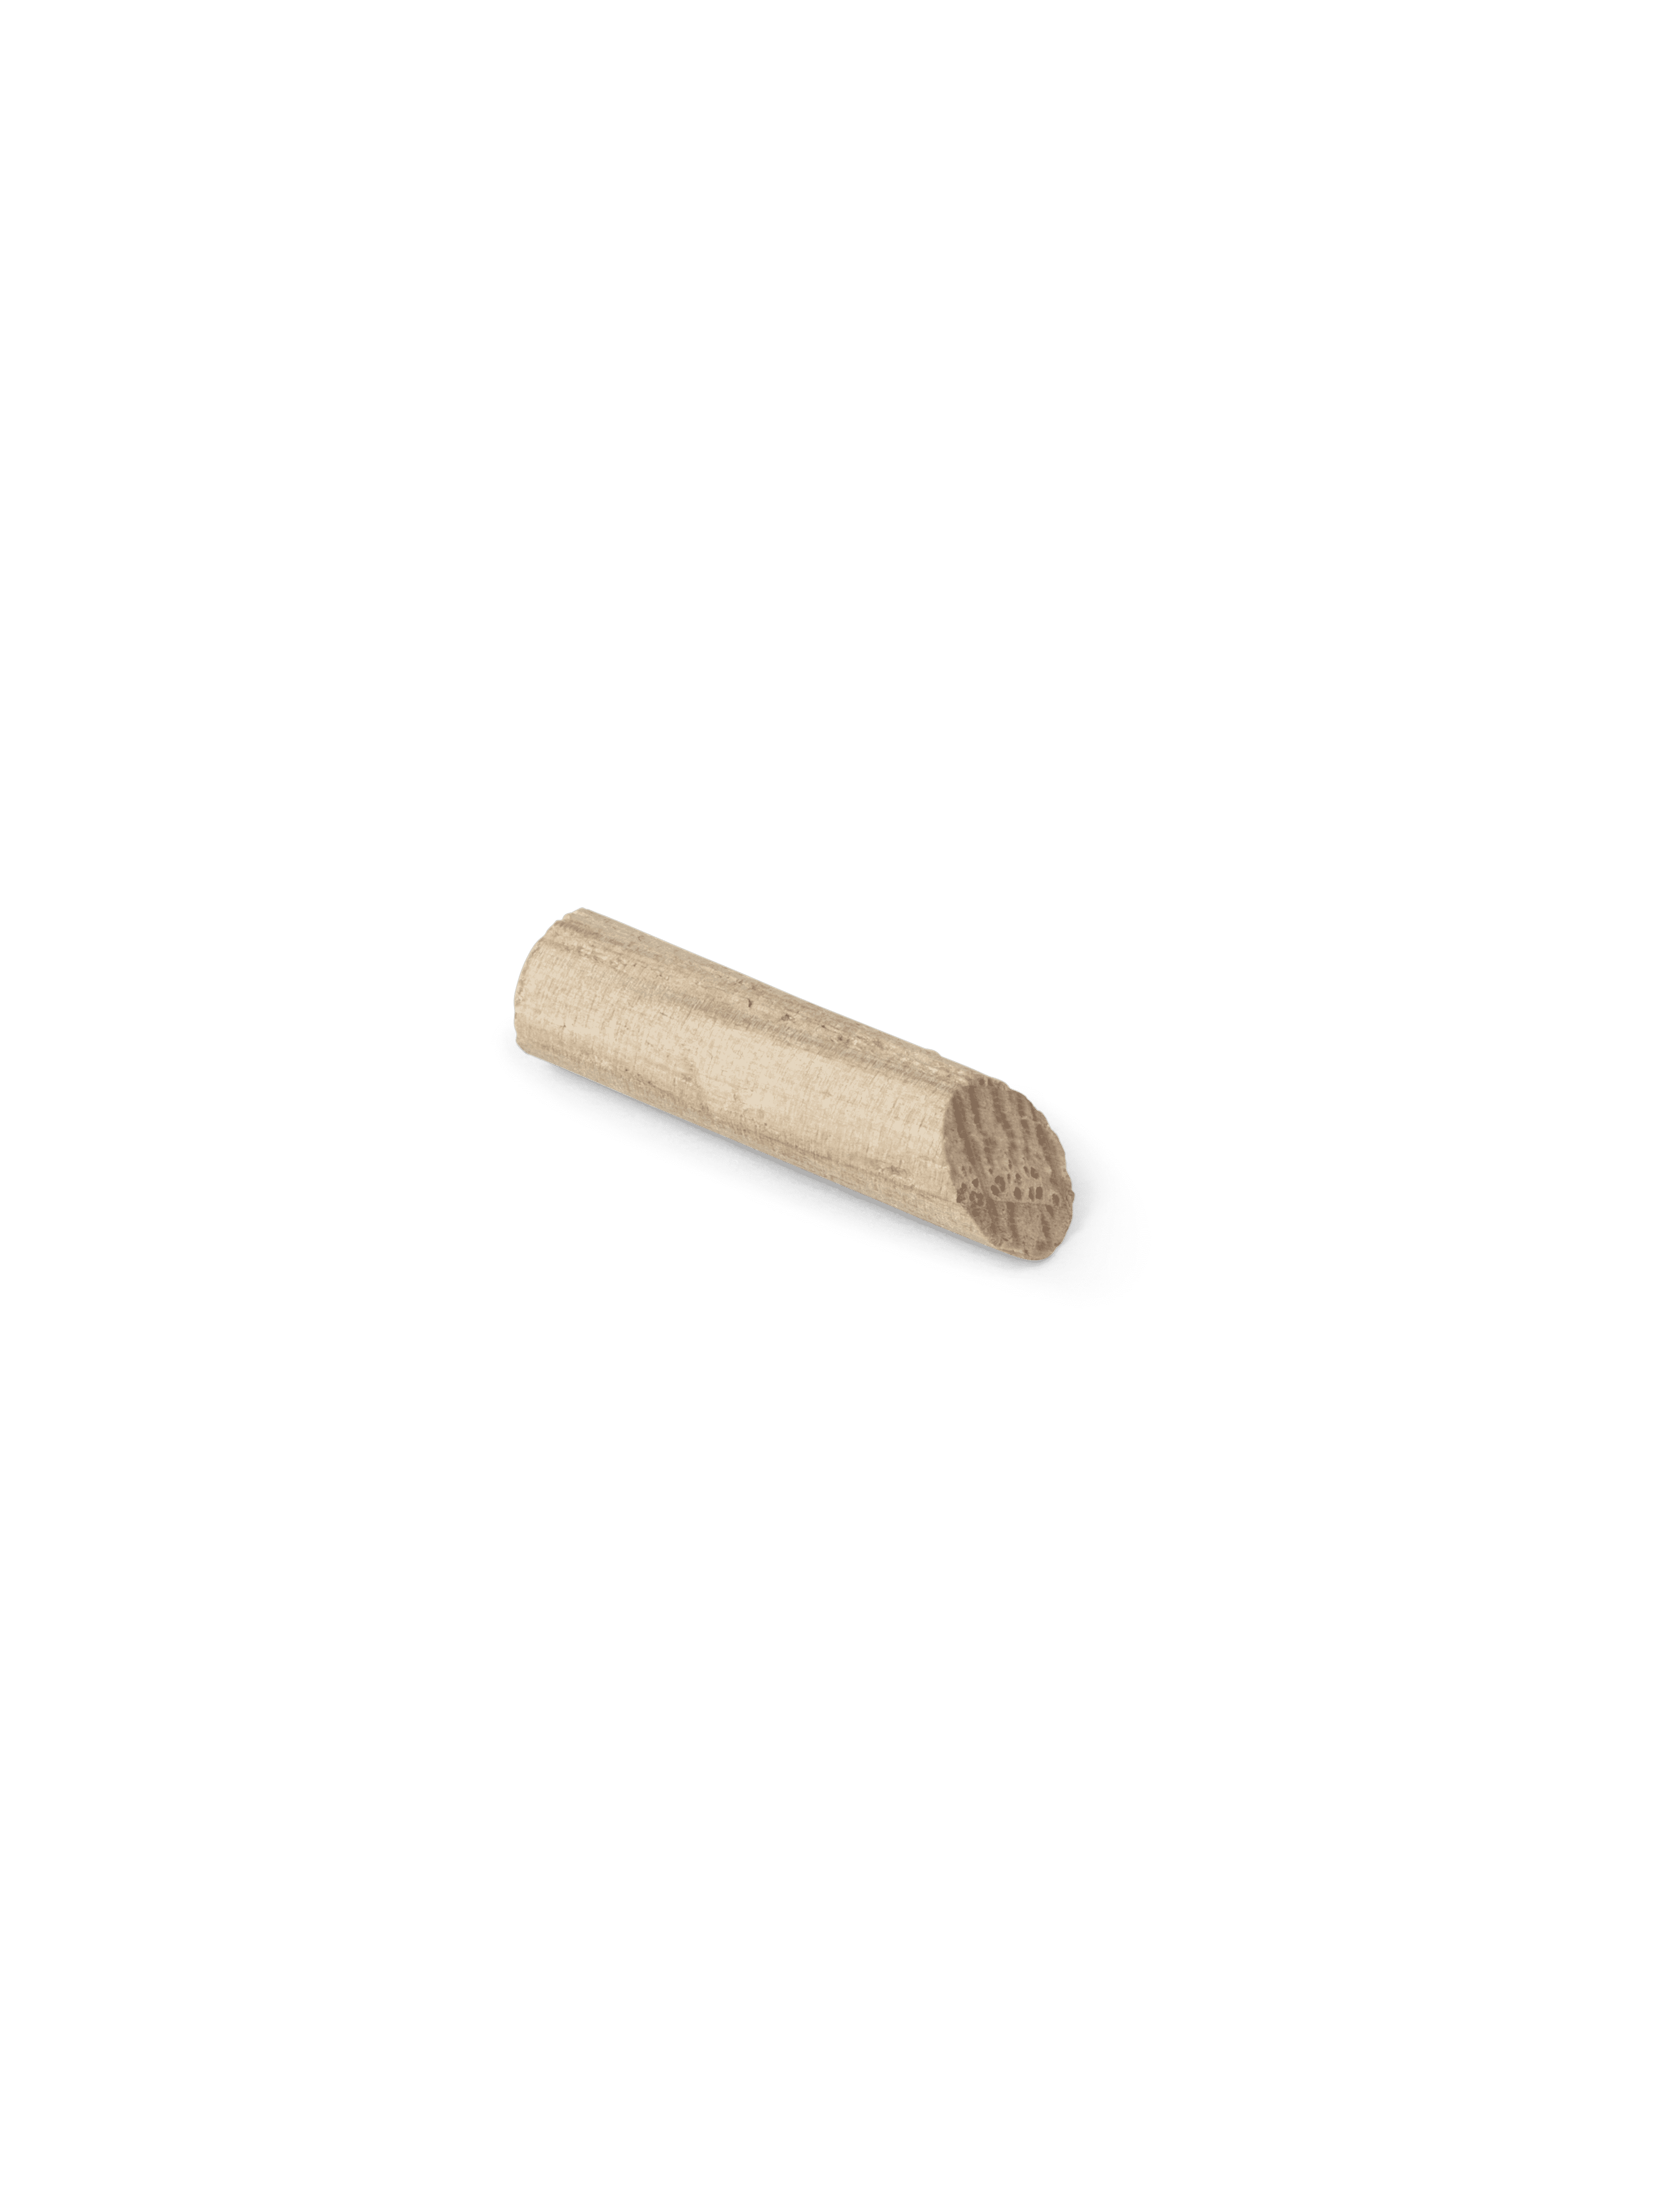 Hippopotamus oak tooth (39202)